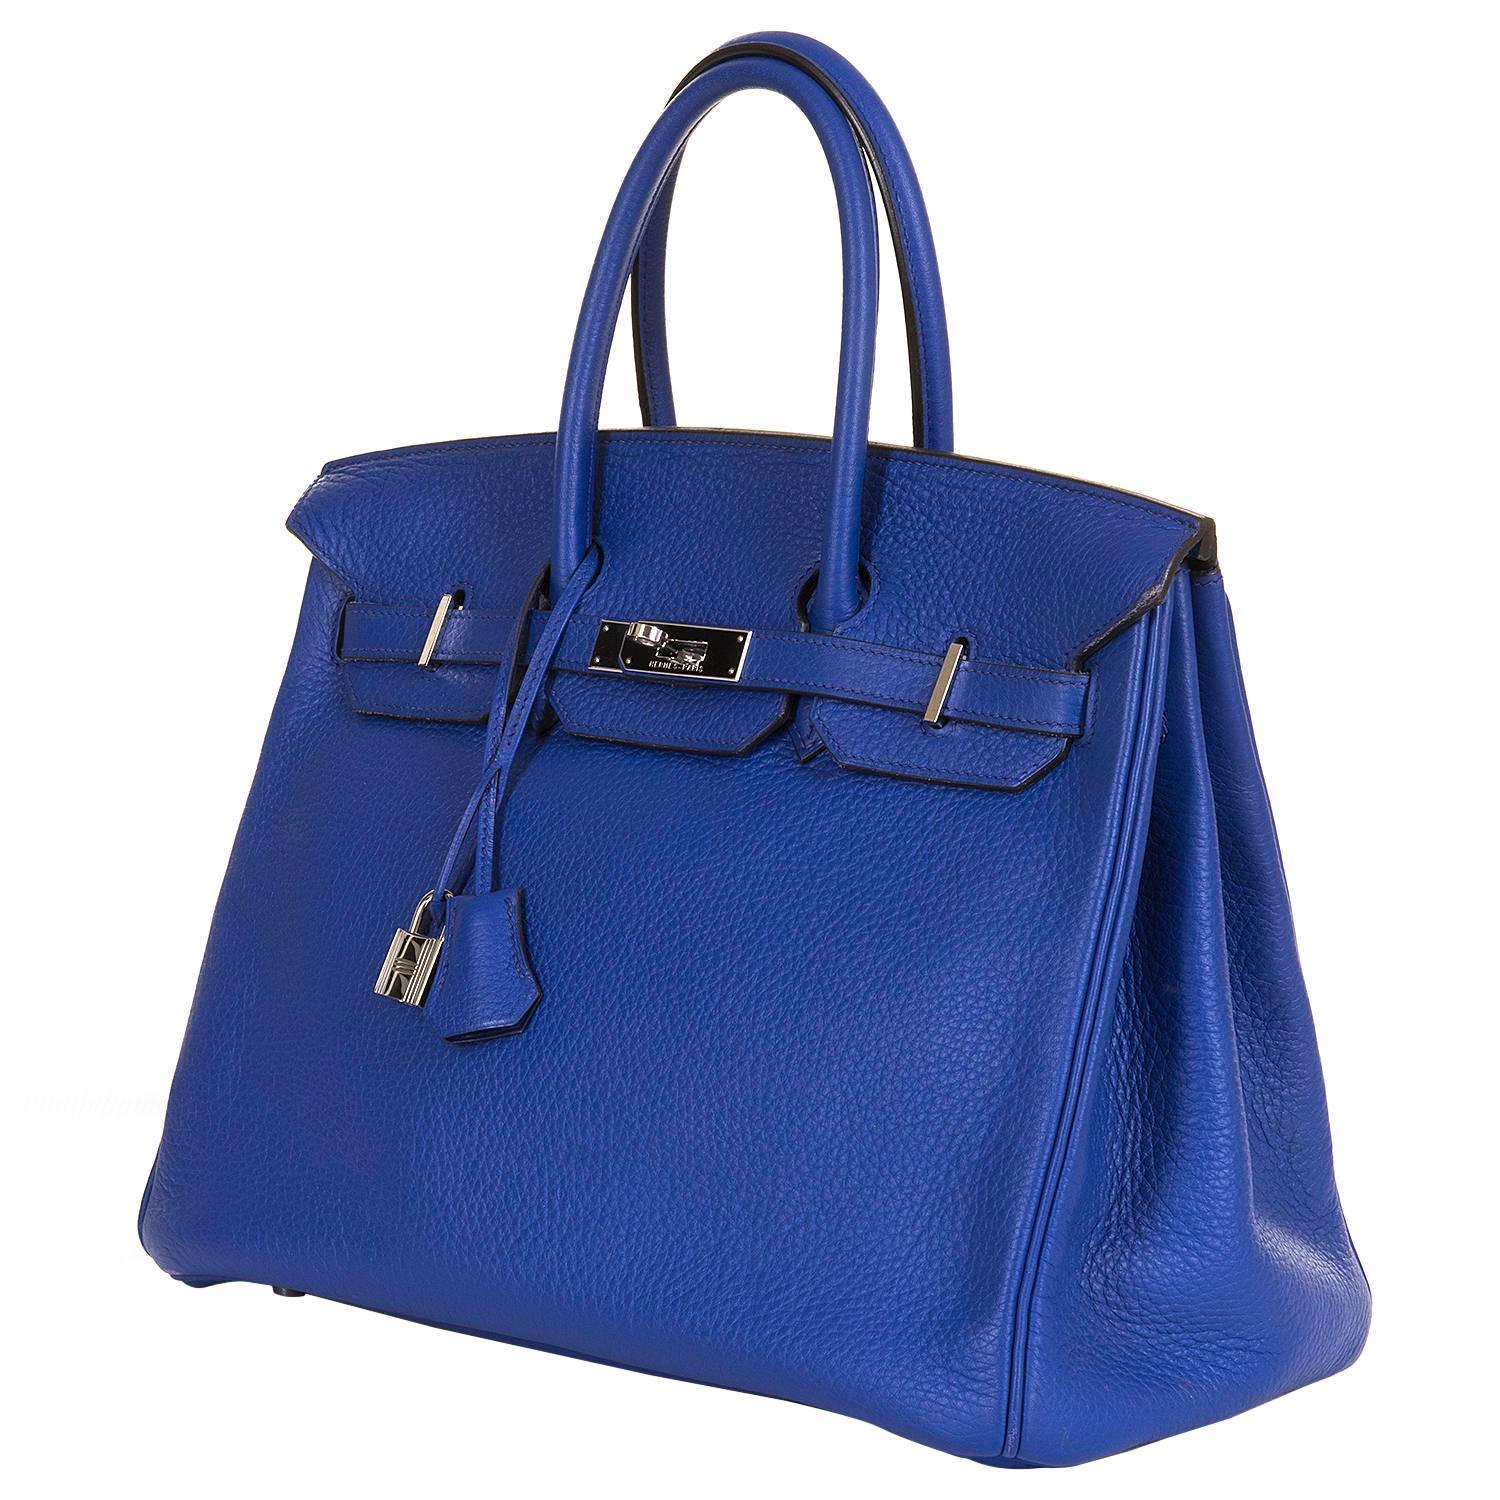 PRISTINE Hermes 35cm 'Bleu Electrique' Togo Birkin Bag with Palladium Hardware